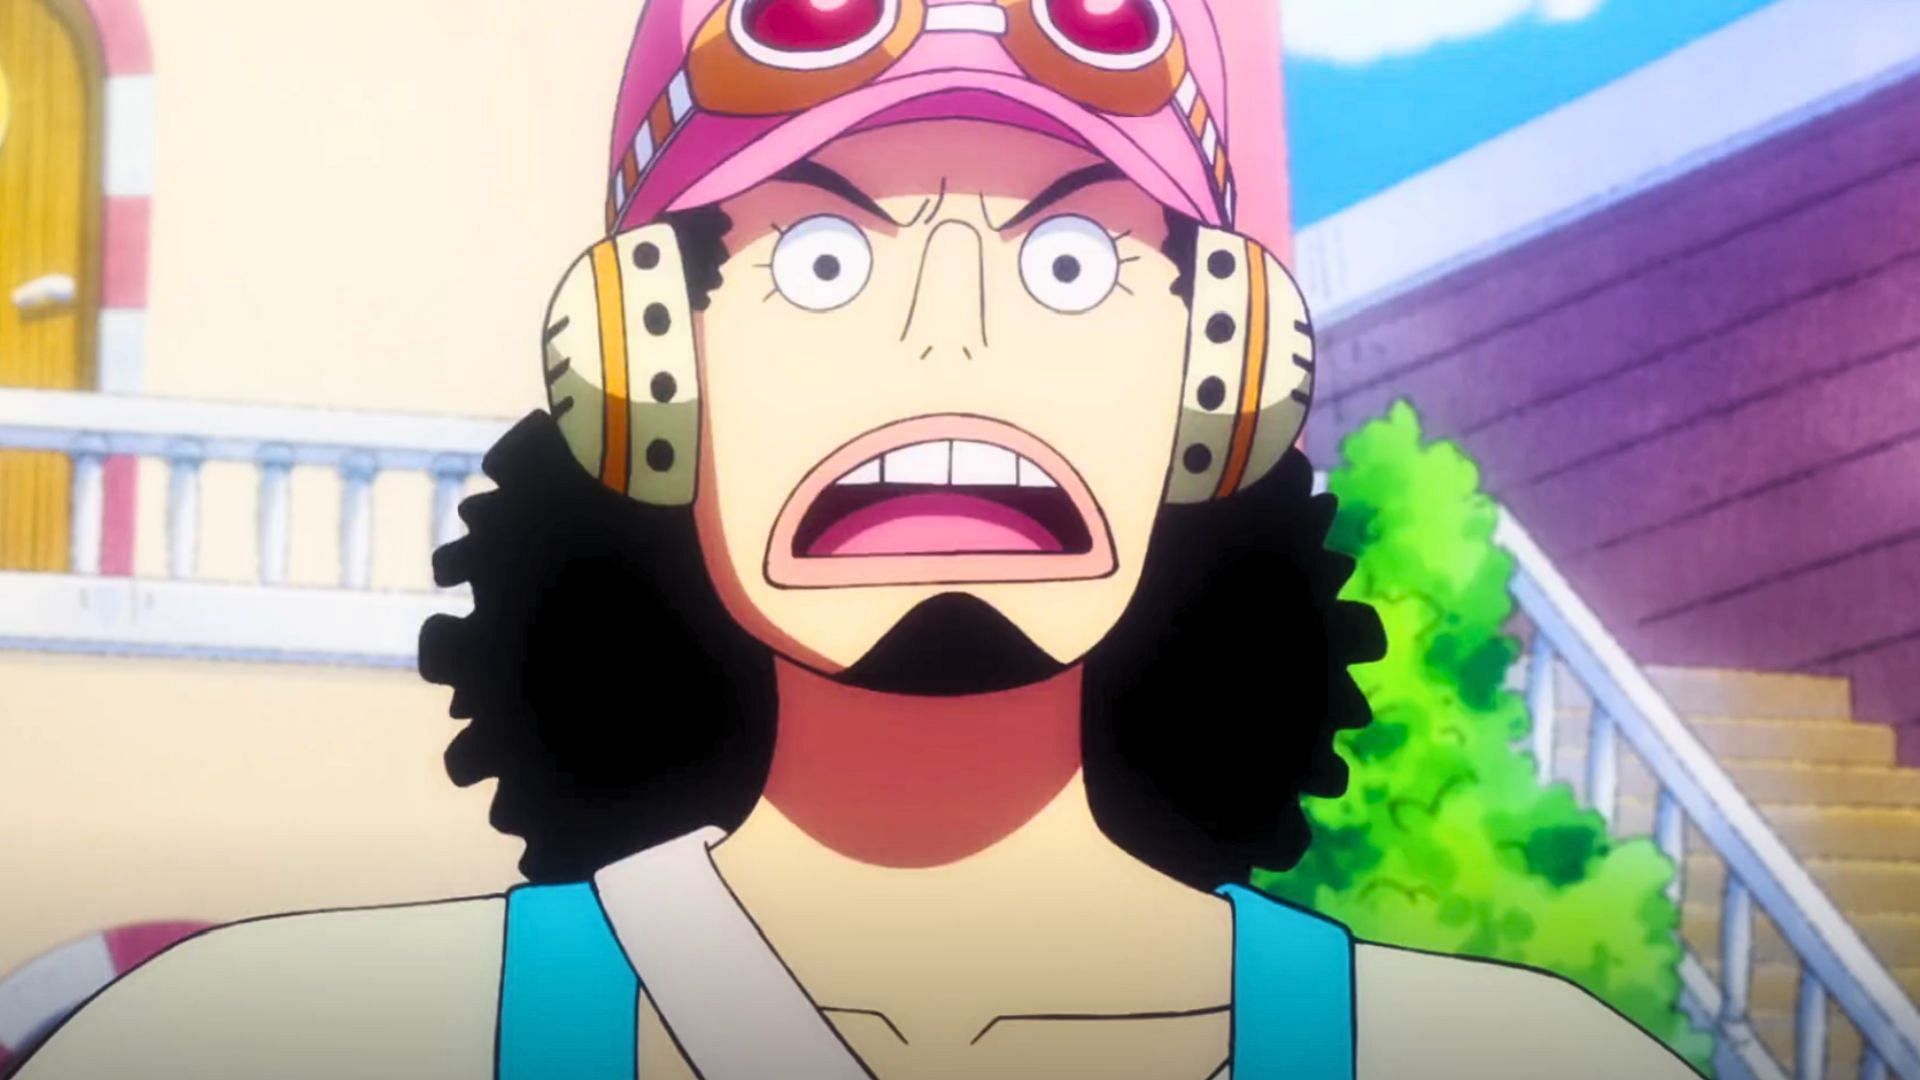 Usopp as seen in One Piece anime (Image via Toei Animation)